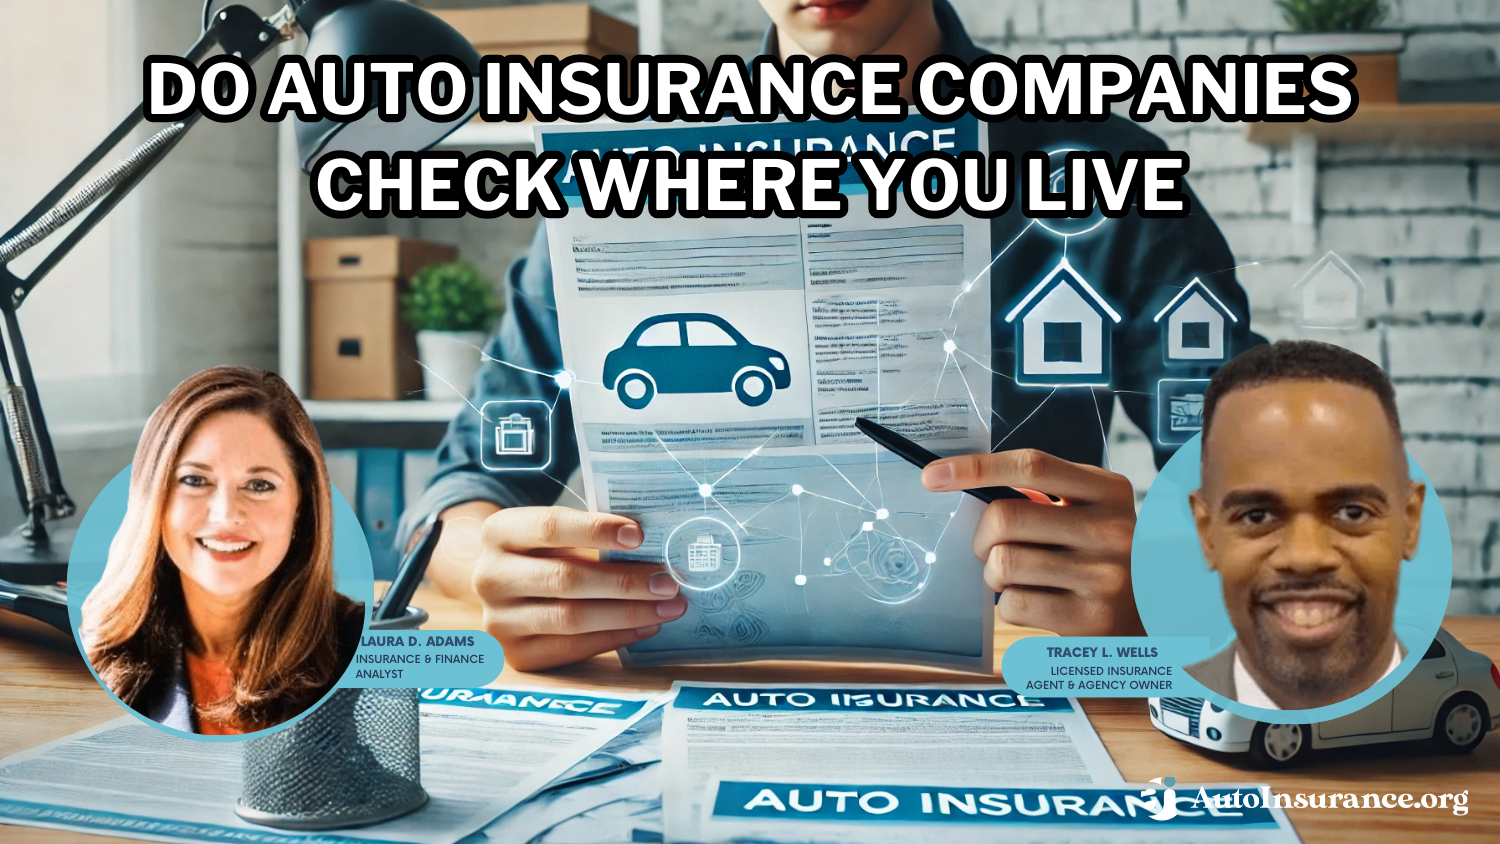 Do auto insurance companies check where you live?